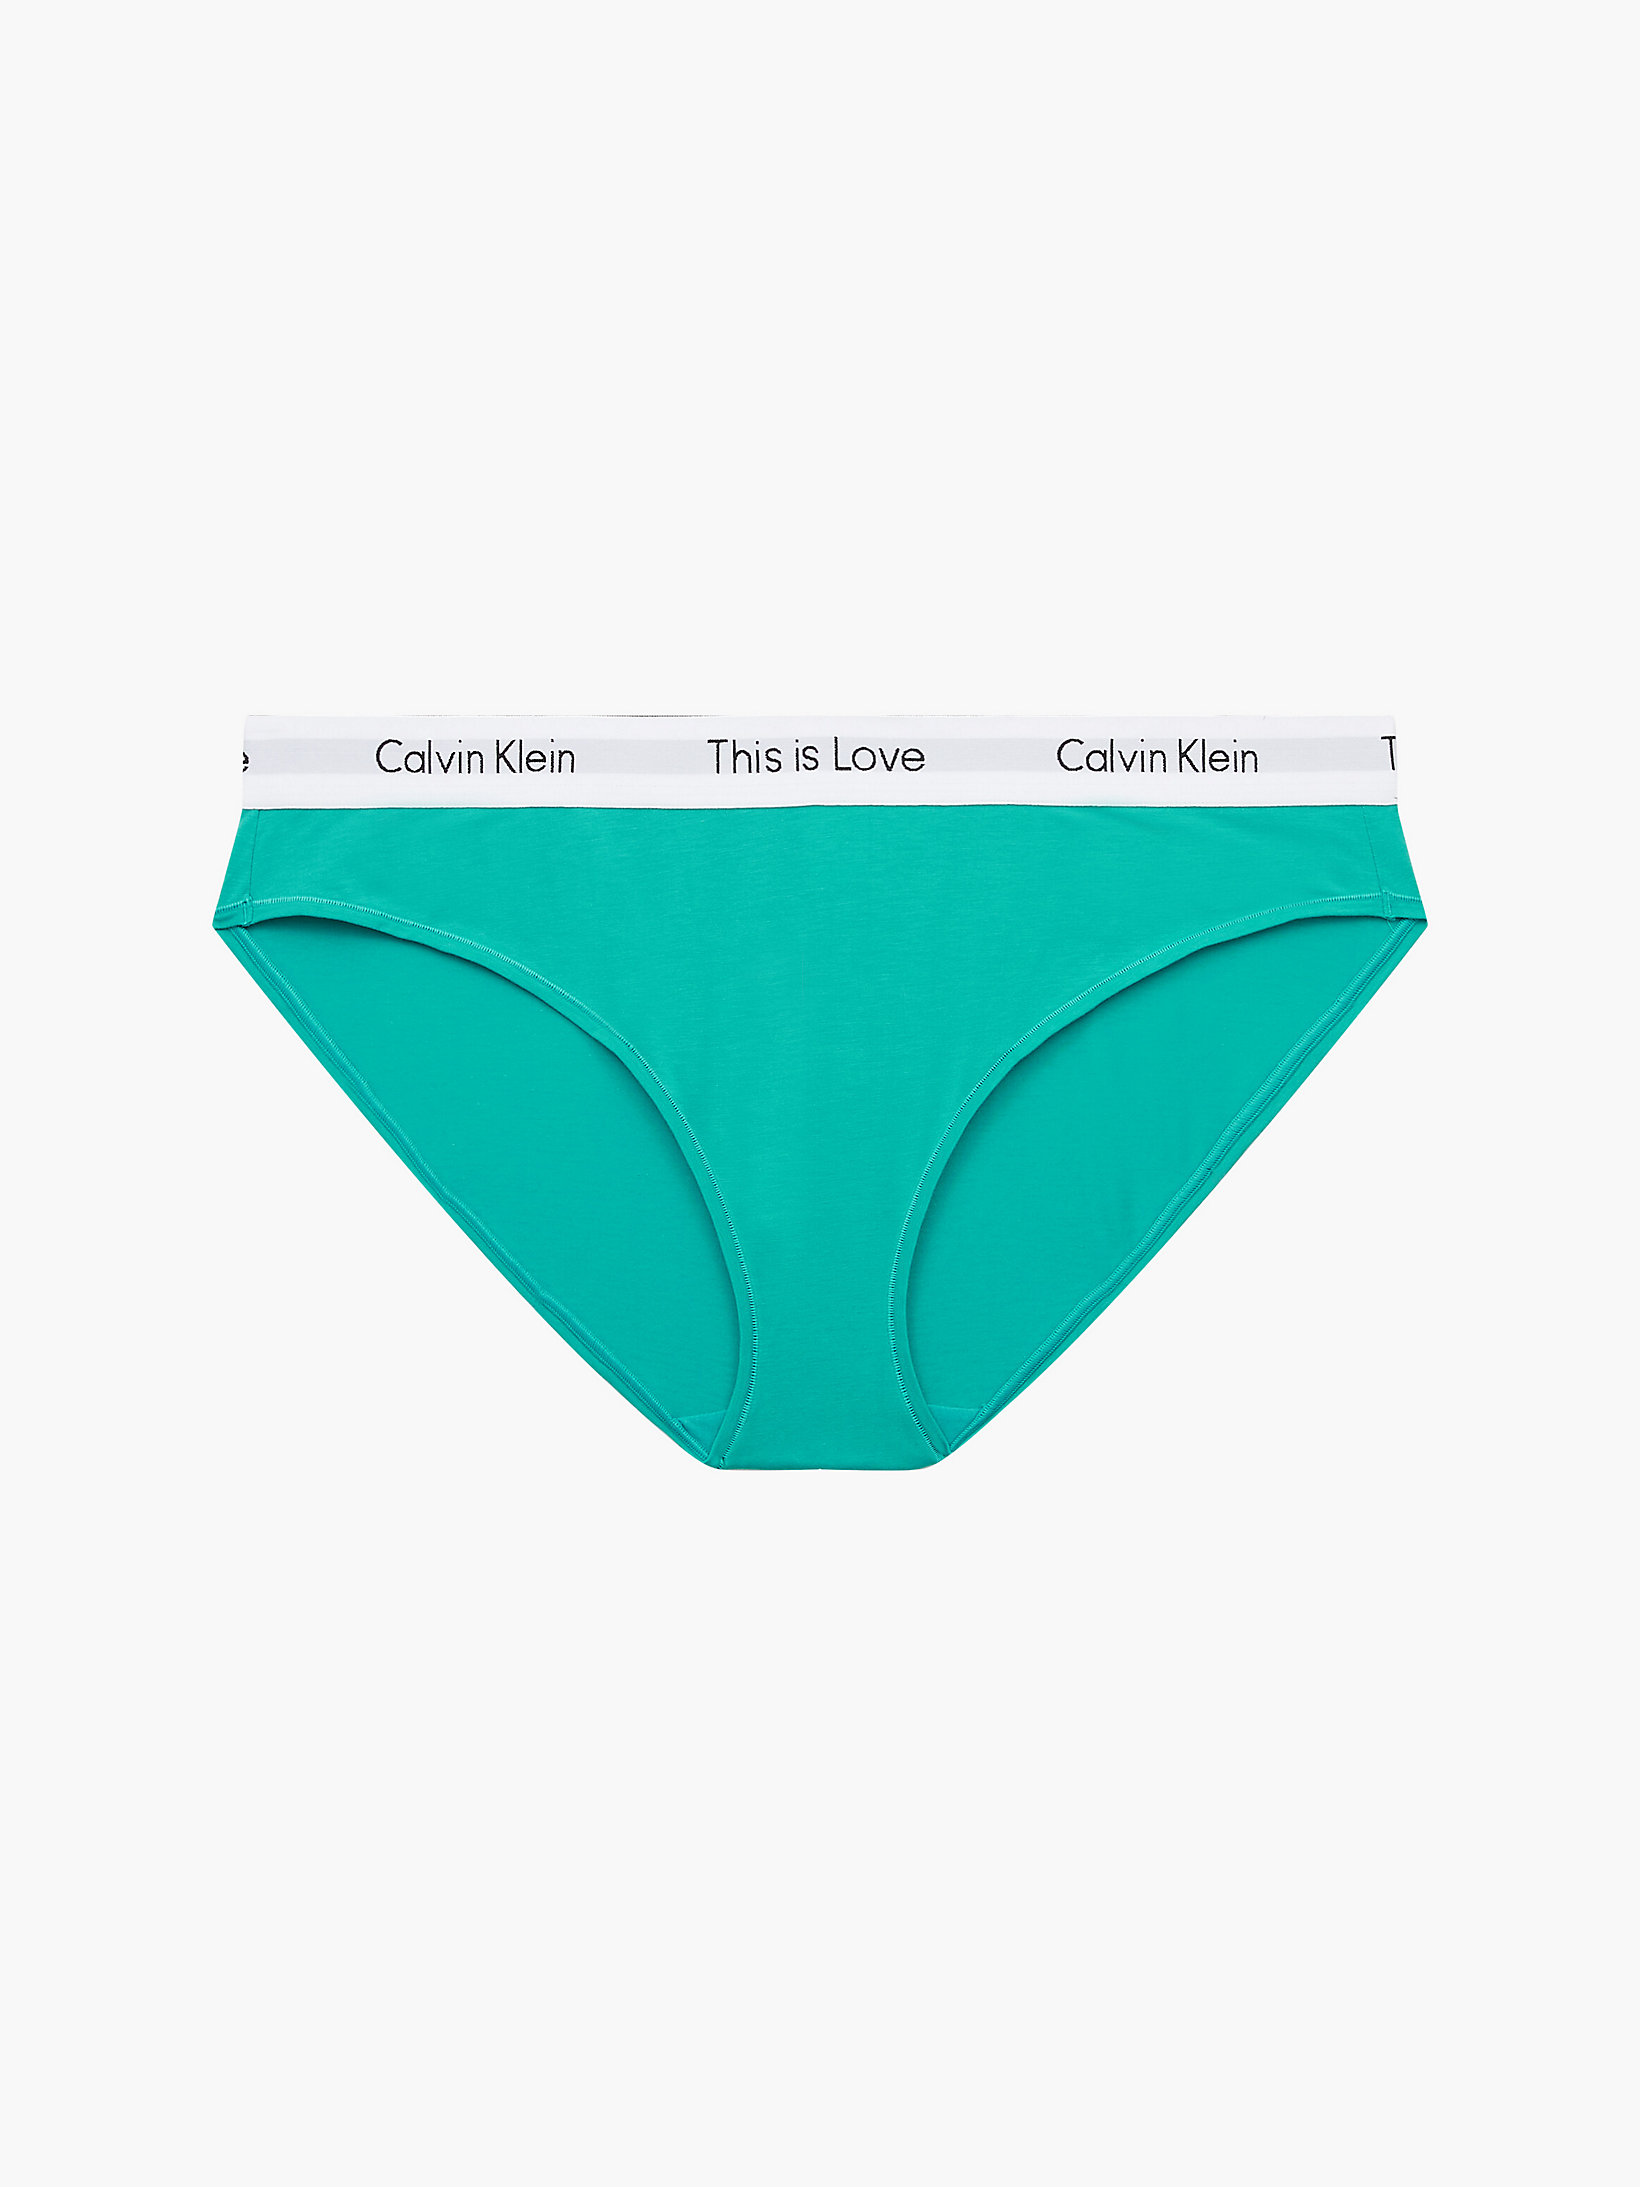 Culotte Grande Taille - Pride > Island Turquoise > undefined femmes > Calvin Klein